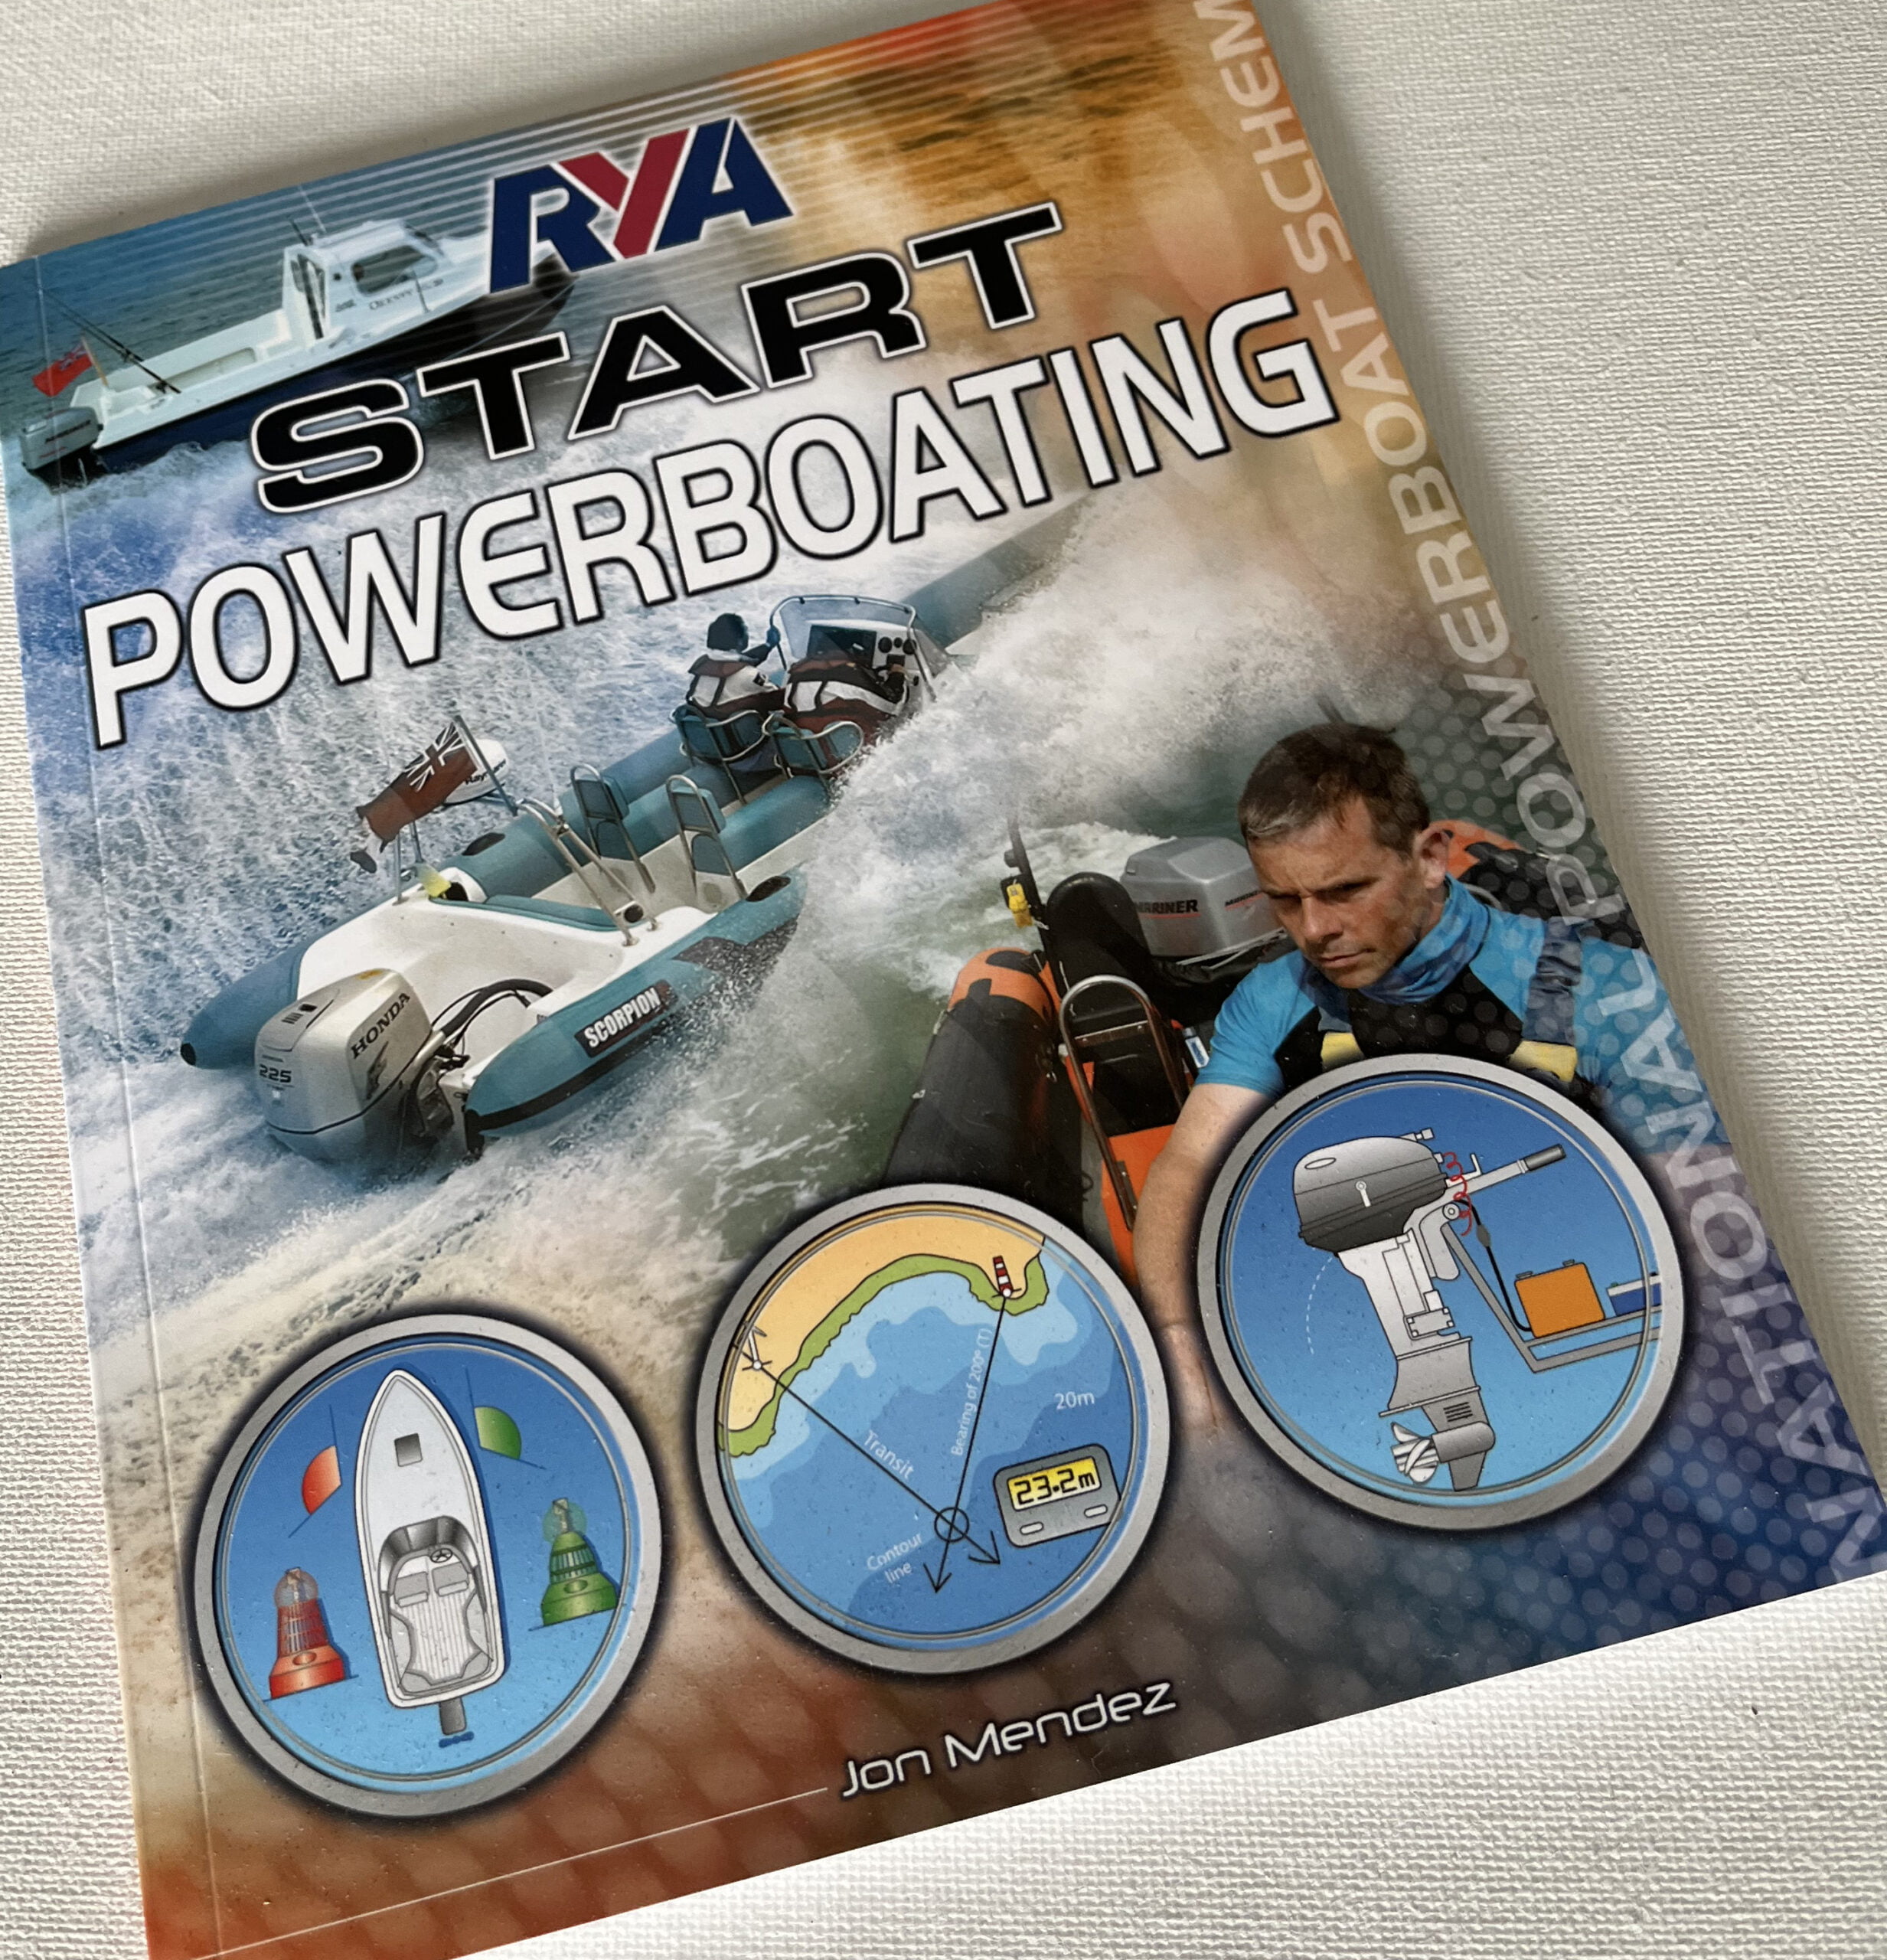 rya powerboat level 2 syllabus pdf